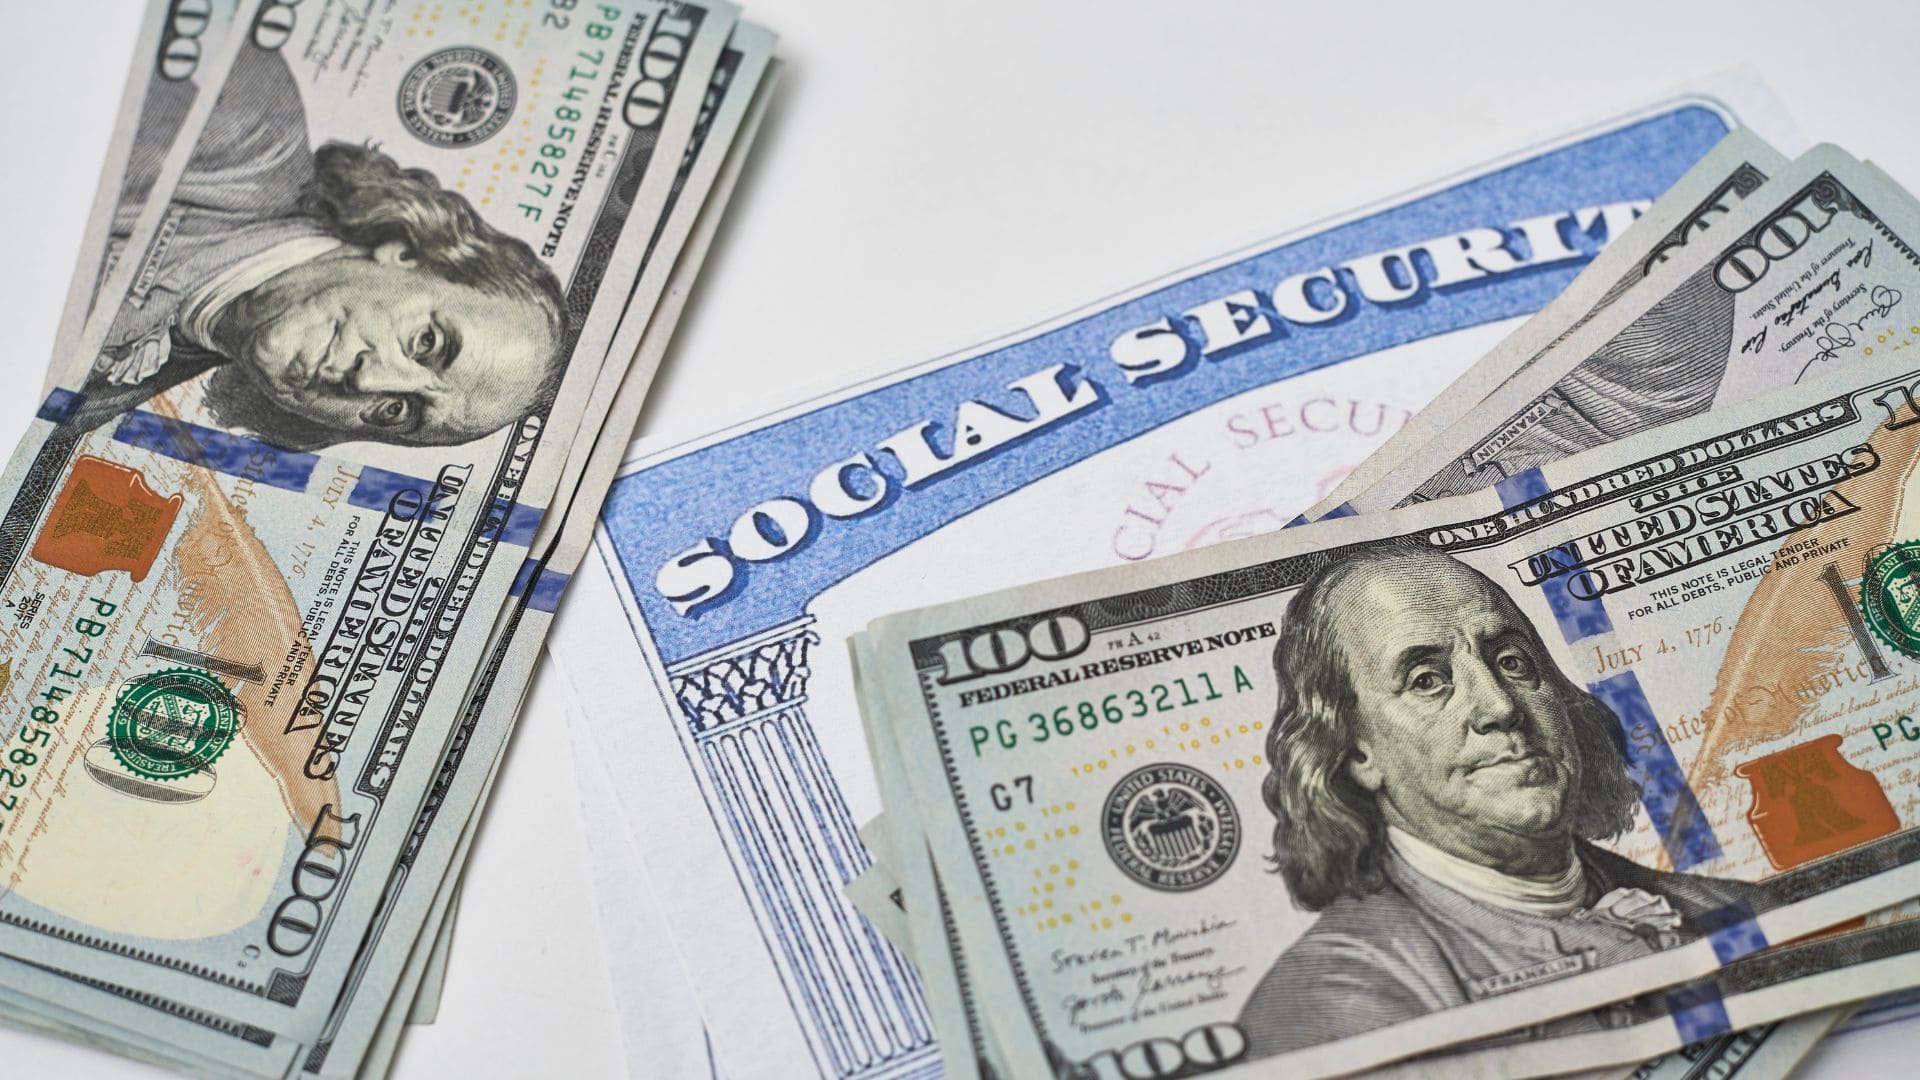 Social Security money will increase